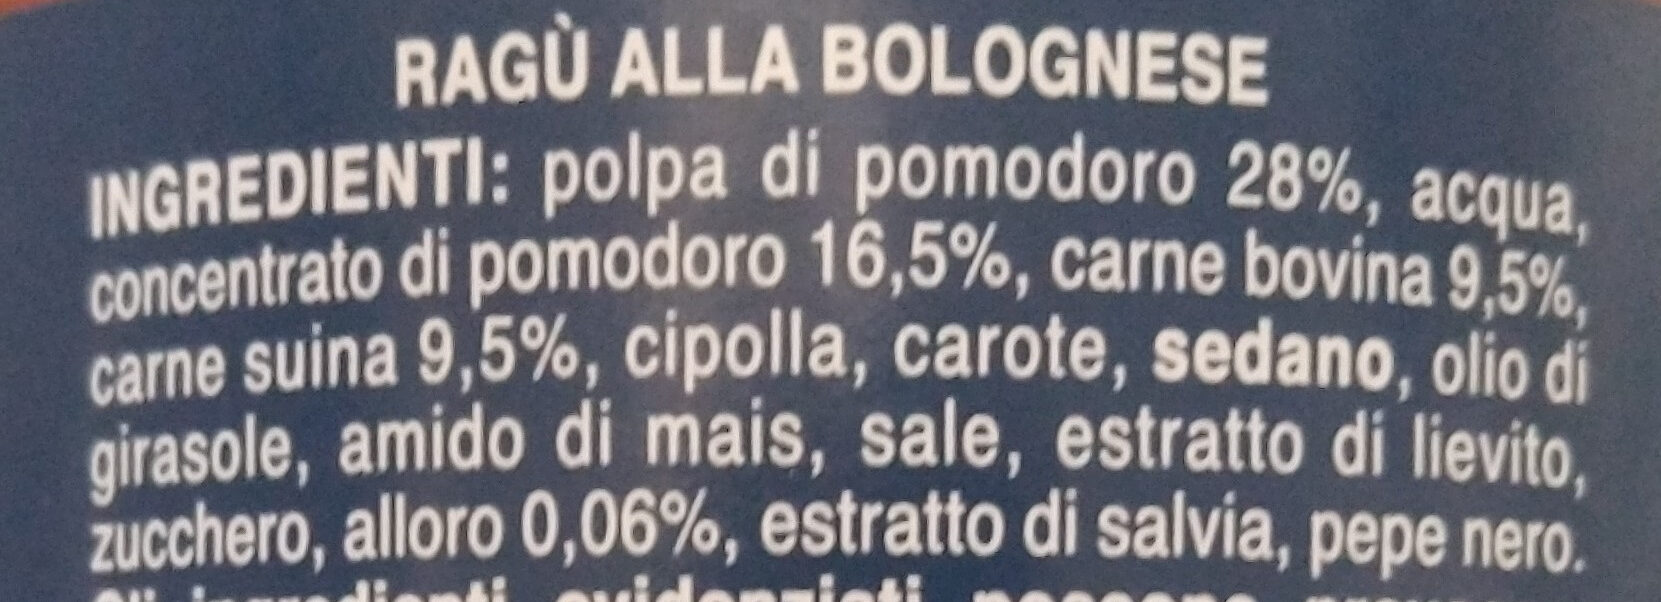 Ragù alla Bolognese - Ingredienti